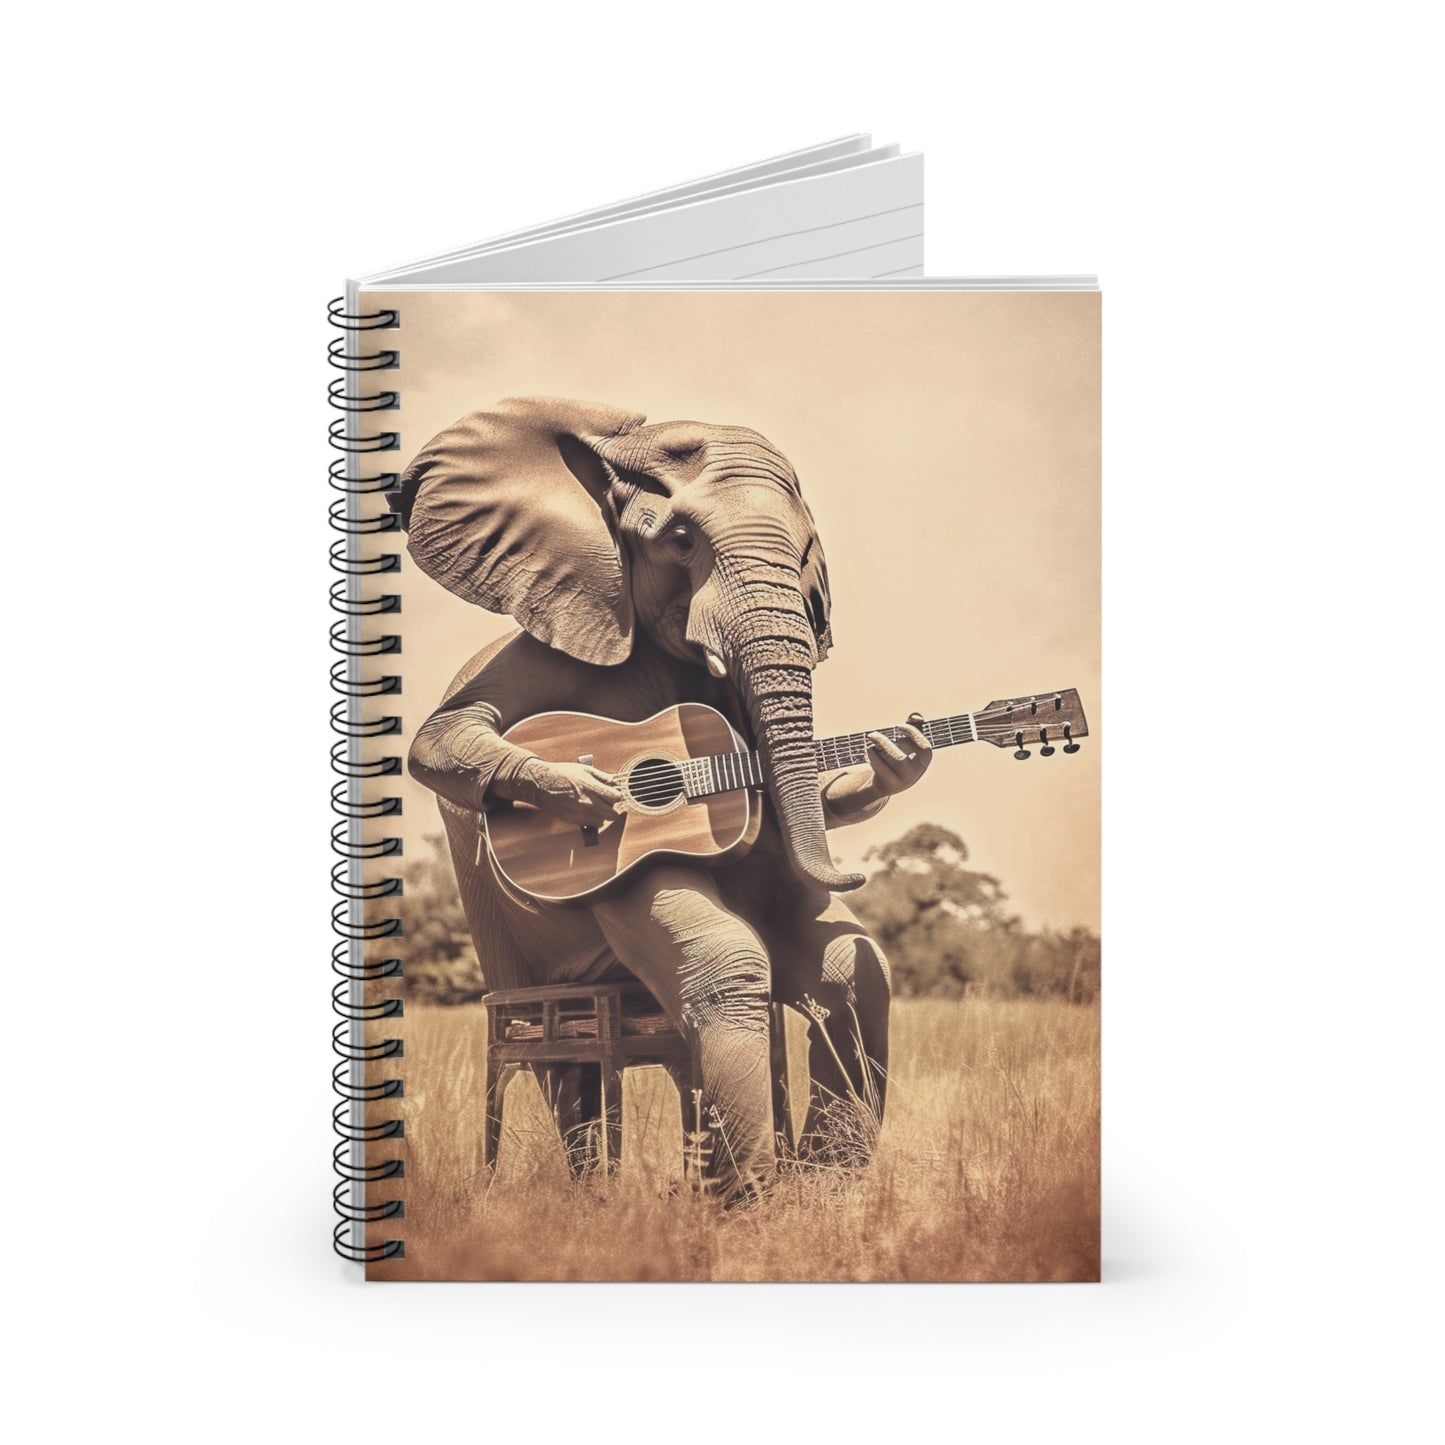 Elephant Guitar | Spiral Notebook - Ruled Line